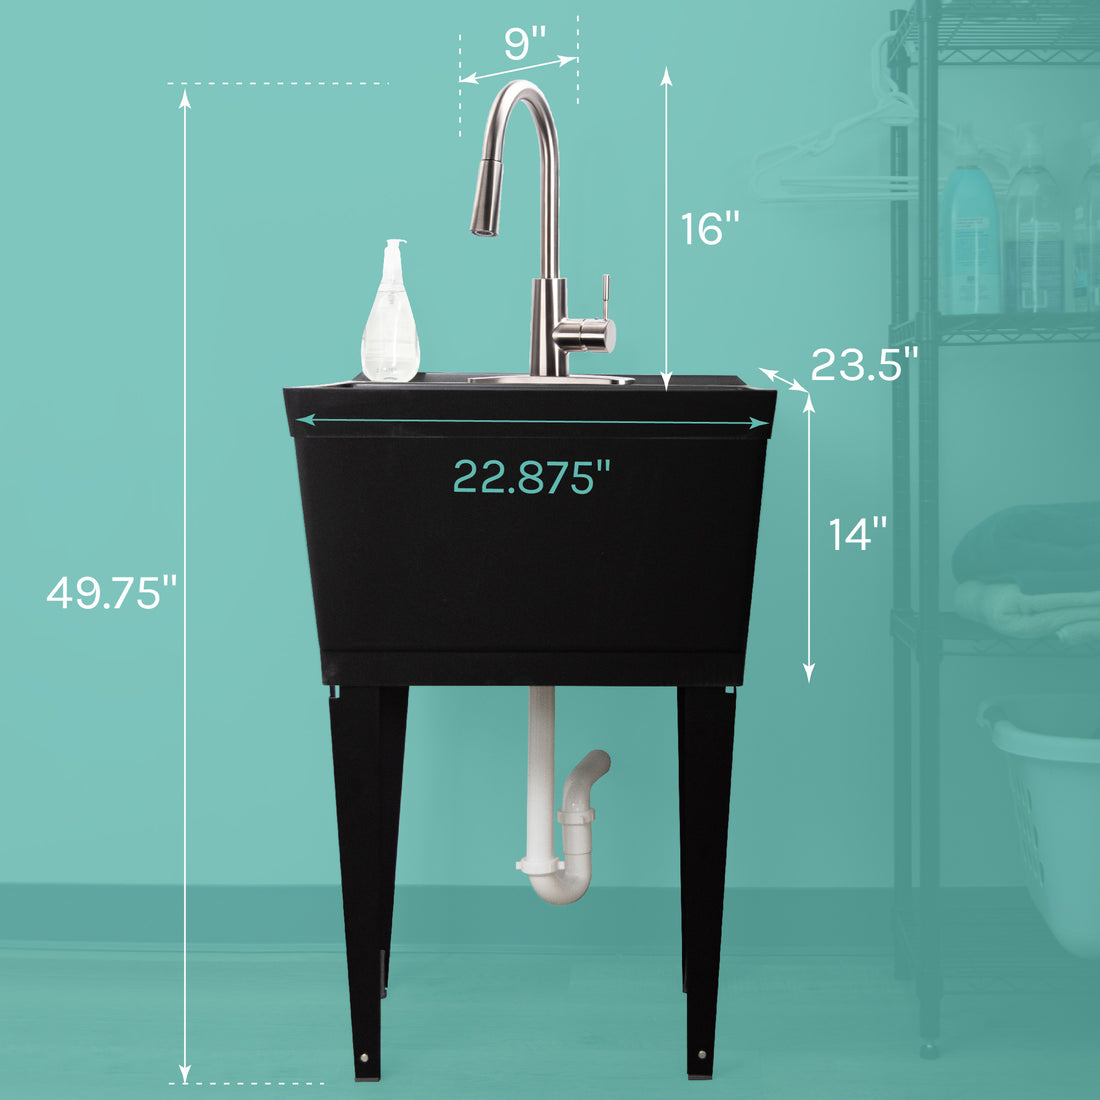 Tehila Standard Freestanding Black Utility Sink with Stainless Steel Finish High-Arc Pull-Down Faucet - Utility sinks vanites Tehila